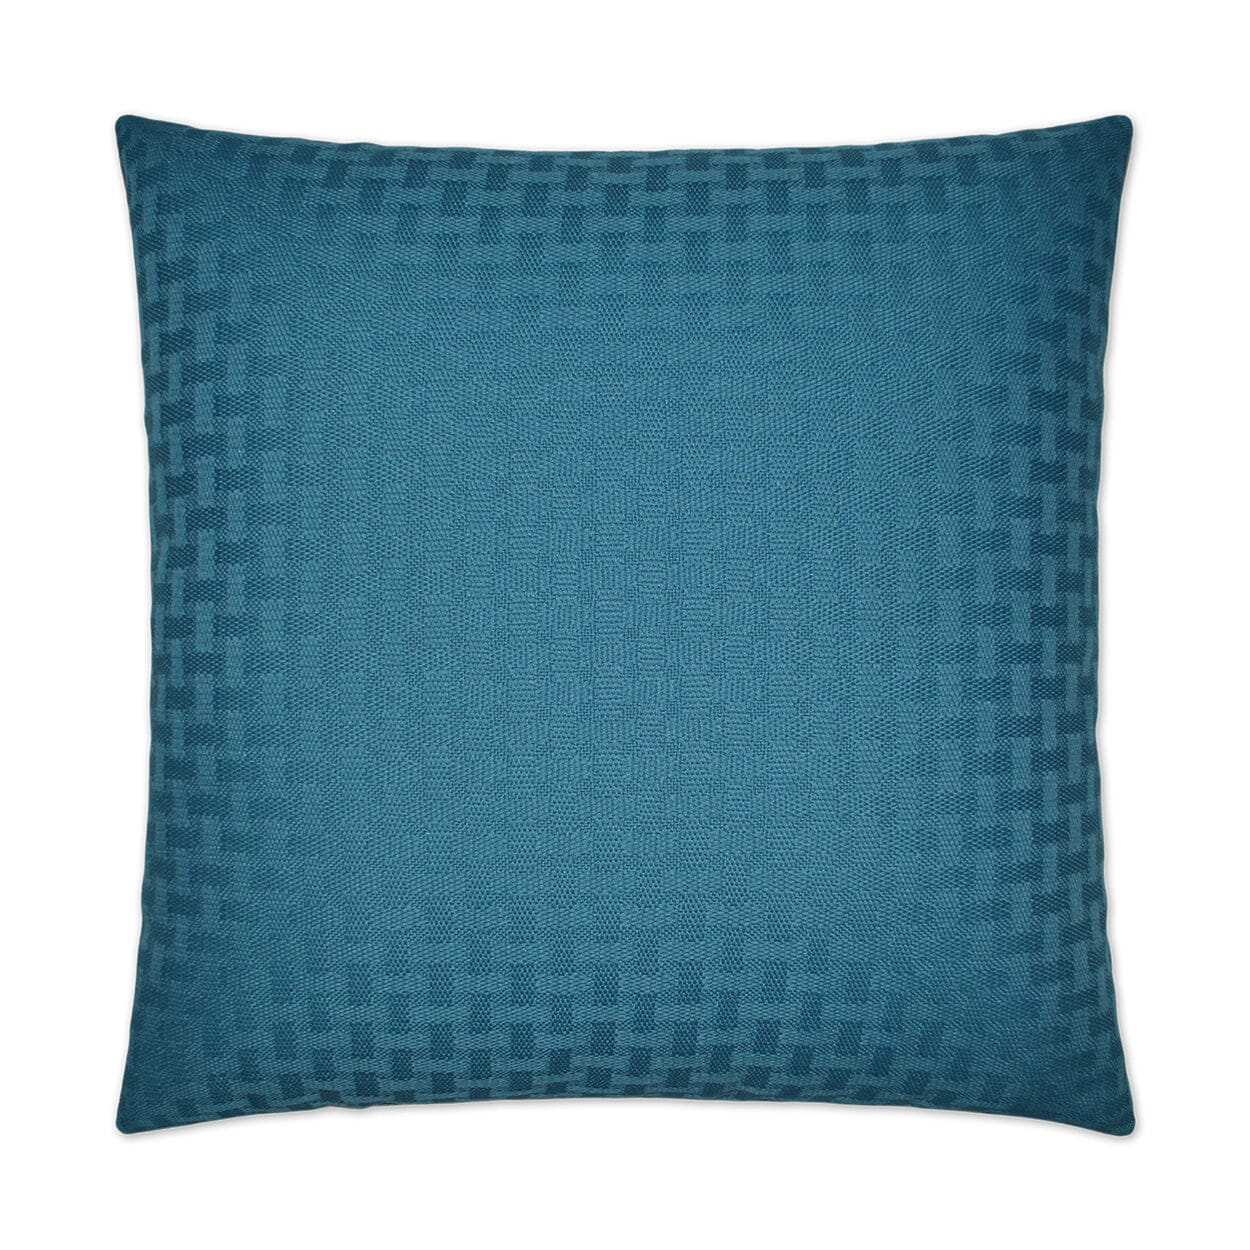 D.V. Kap 22" x 22" Outdoor Throw Pillow | Carmel Weave Turquoise Pillows D.V Kap Outdoor